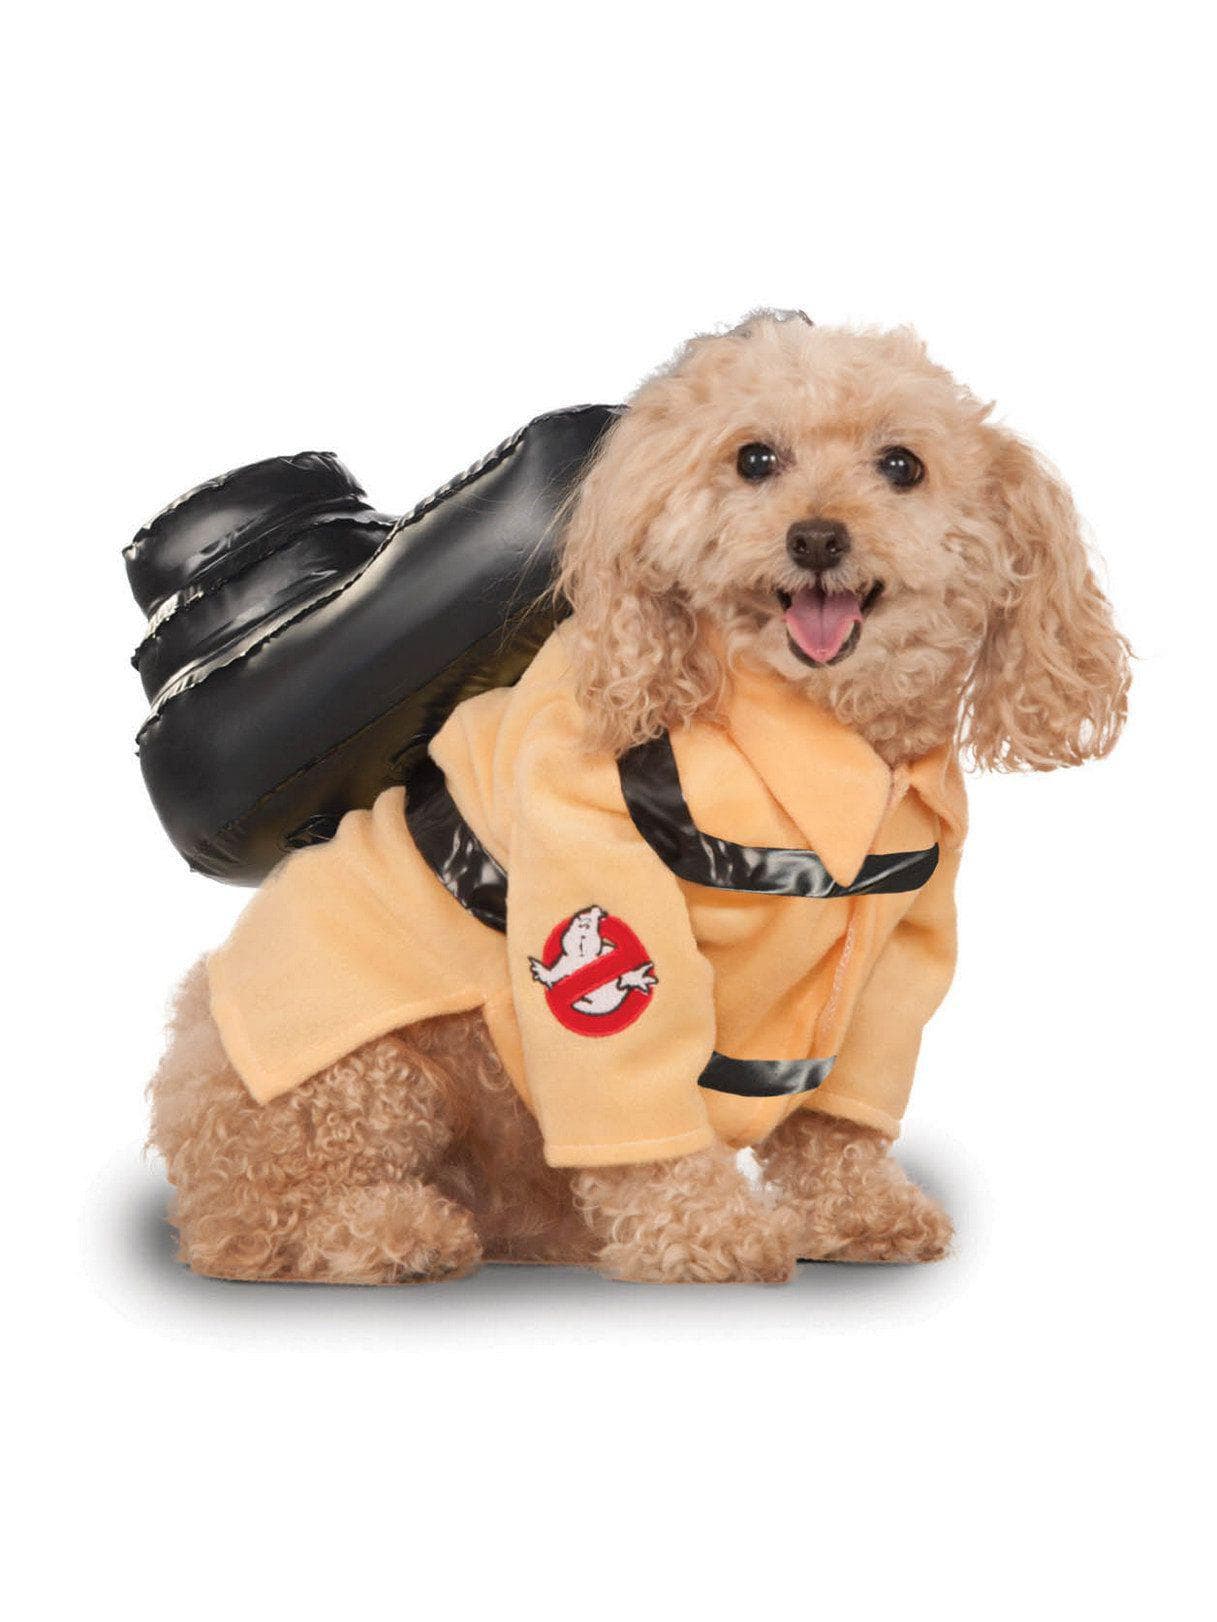 Ghostbusters Pet Costume - costumes.com